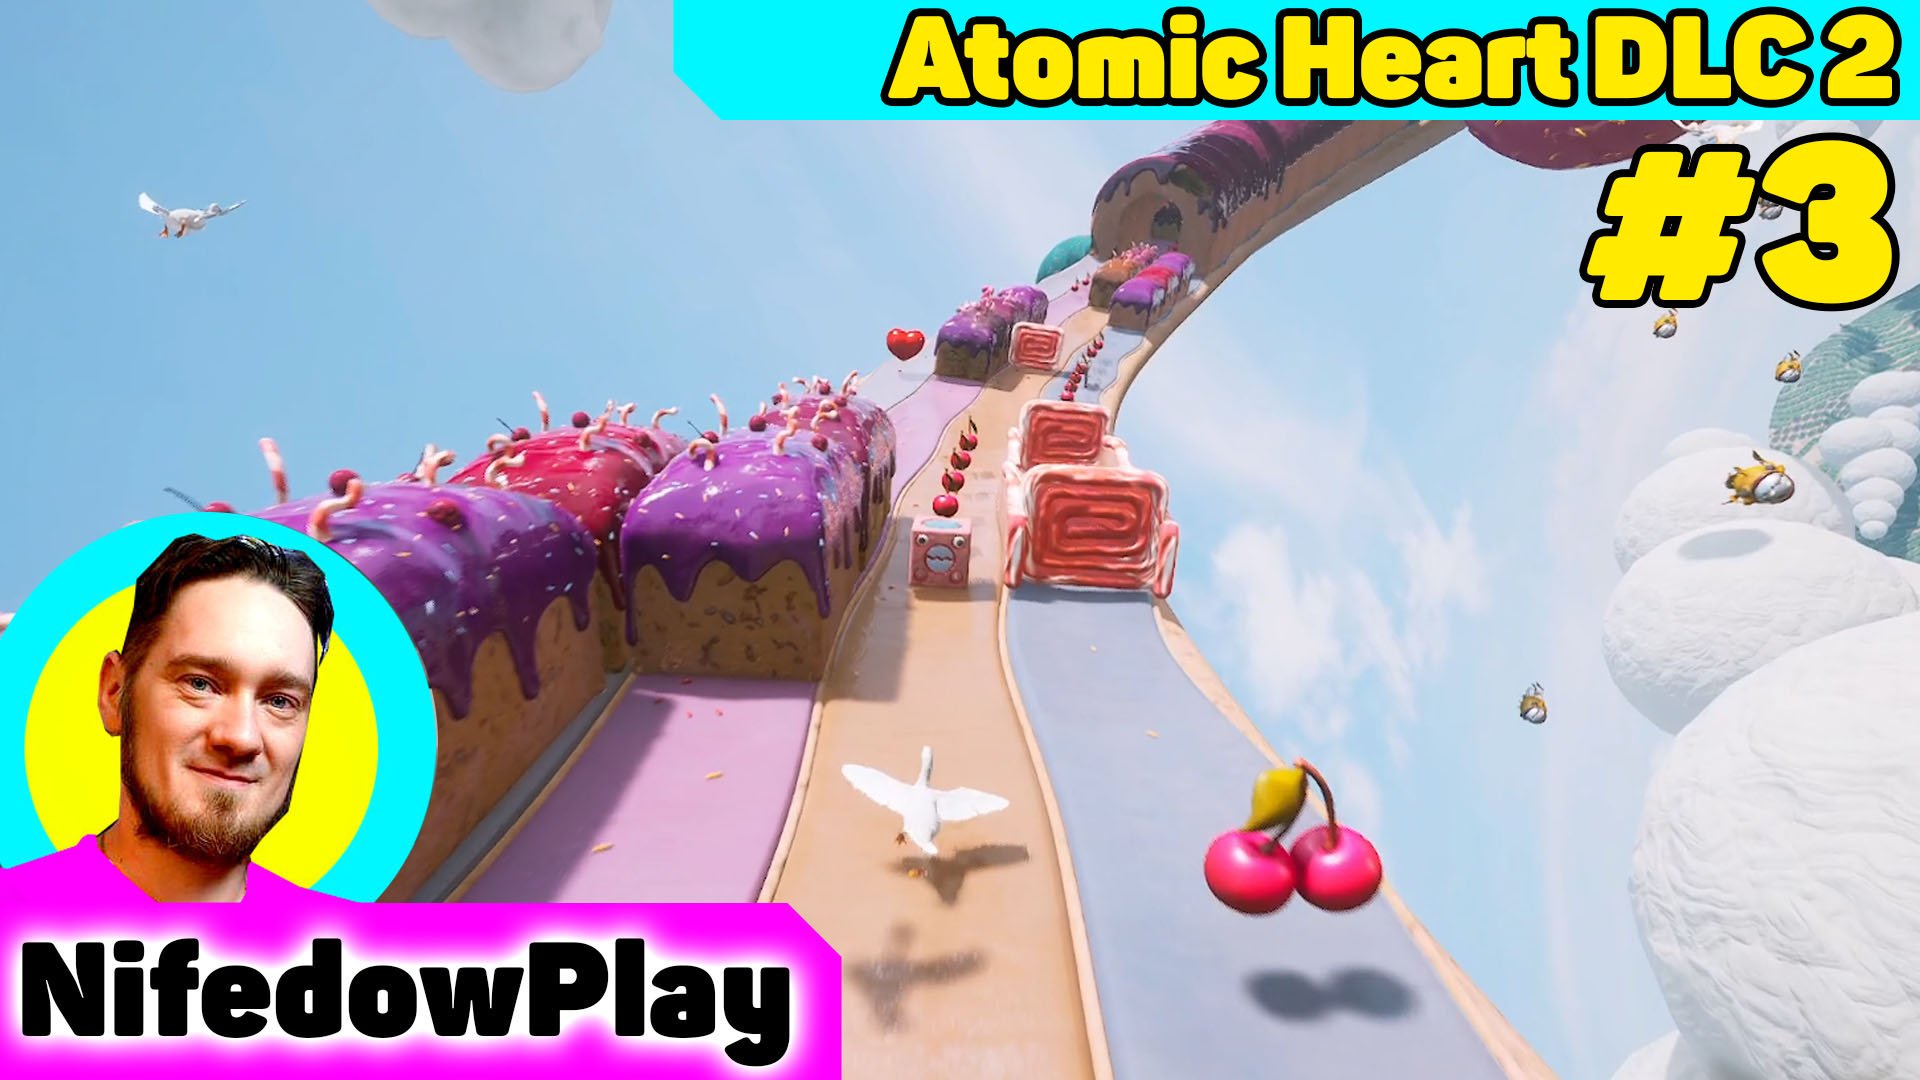 NifedowPlay ▶ Atomic Heart DLC 2 - Часть 3 - Чуть не разбил клаву от зла!